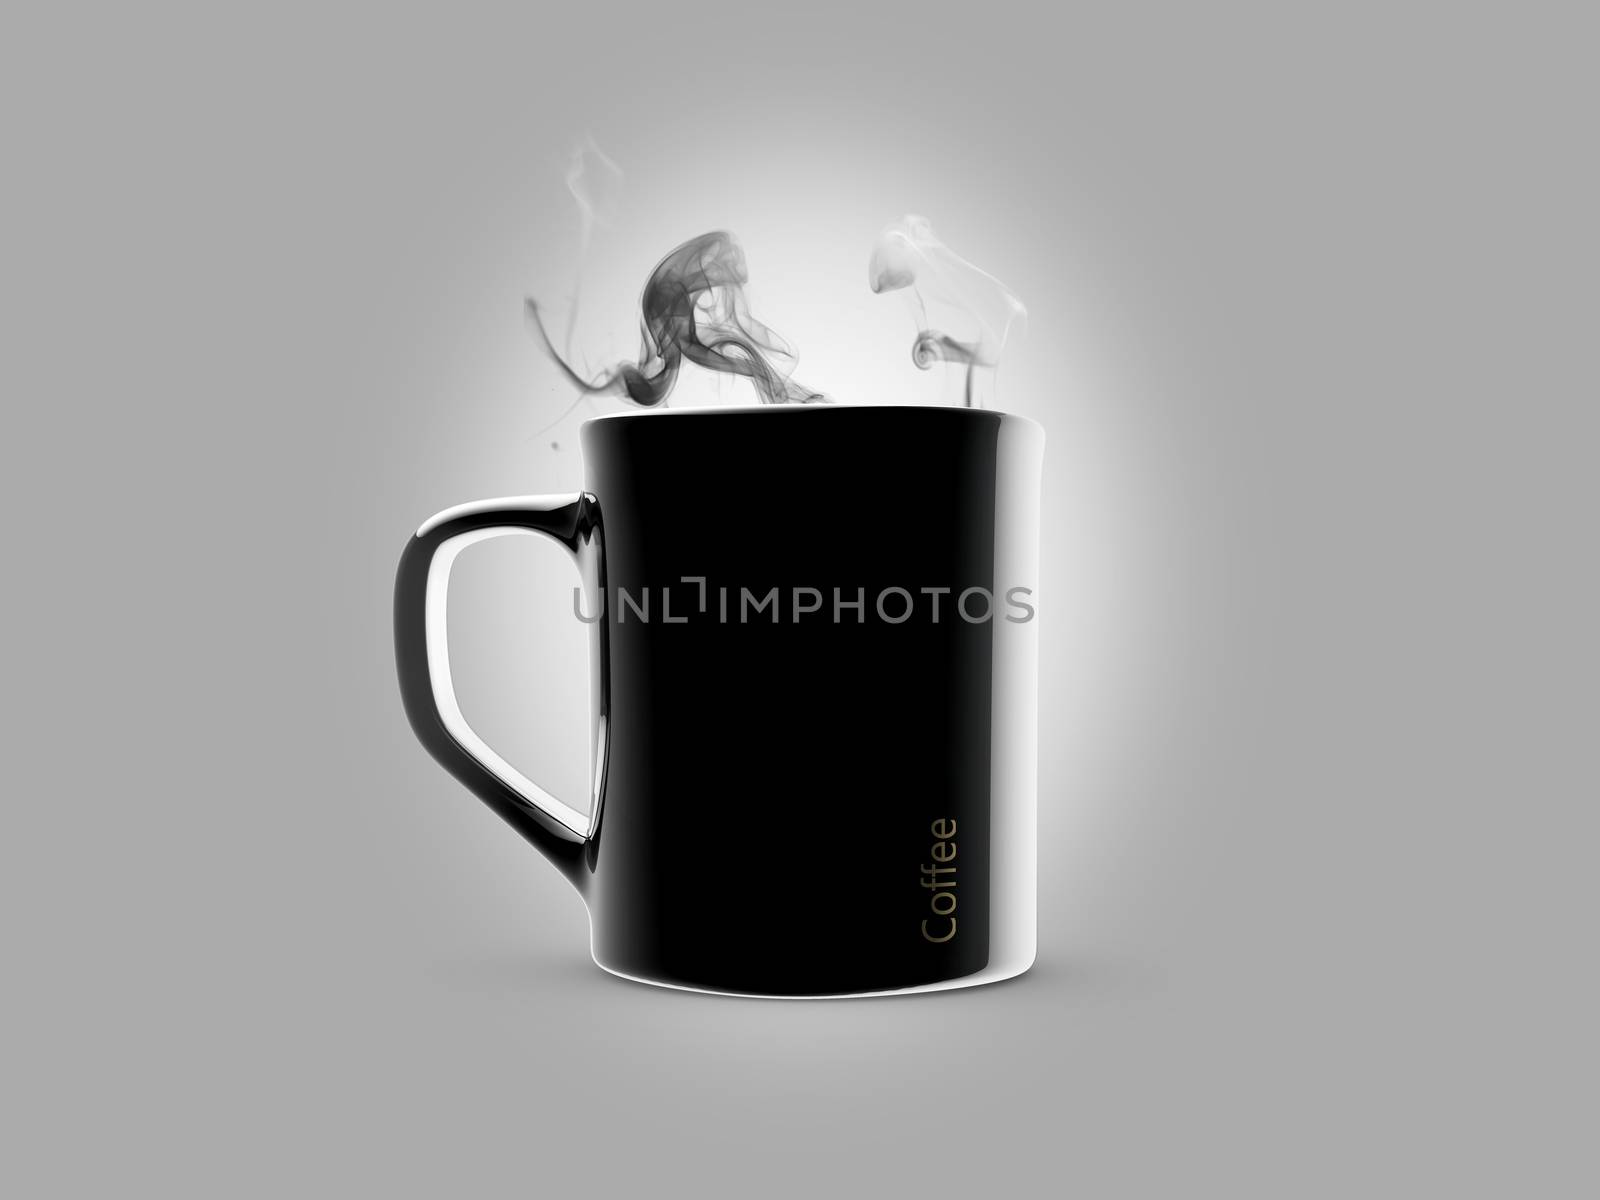 Black ceramic coffee mug. Isolated on a gray